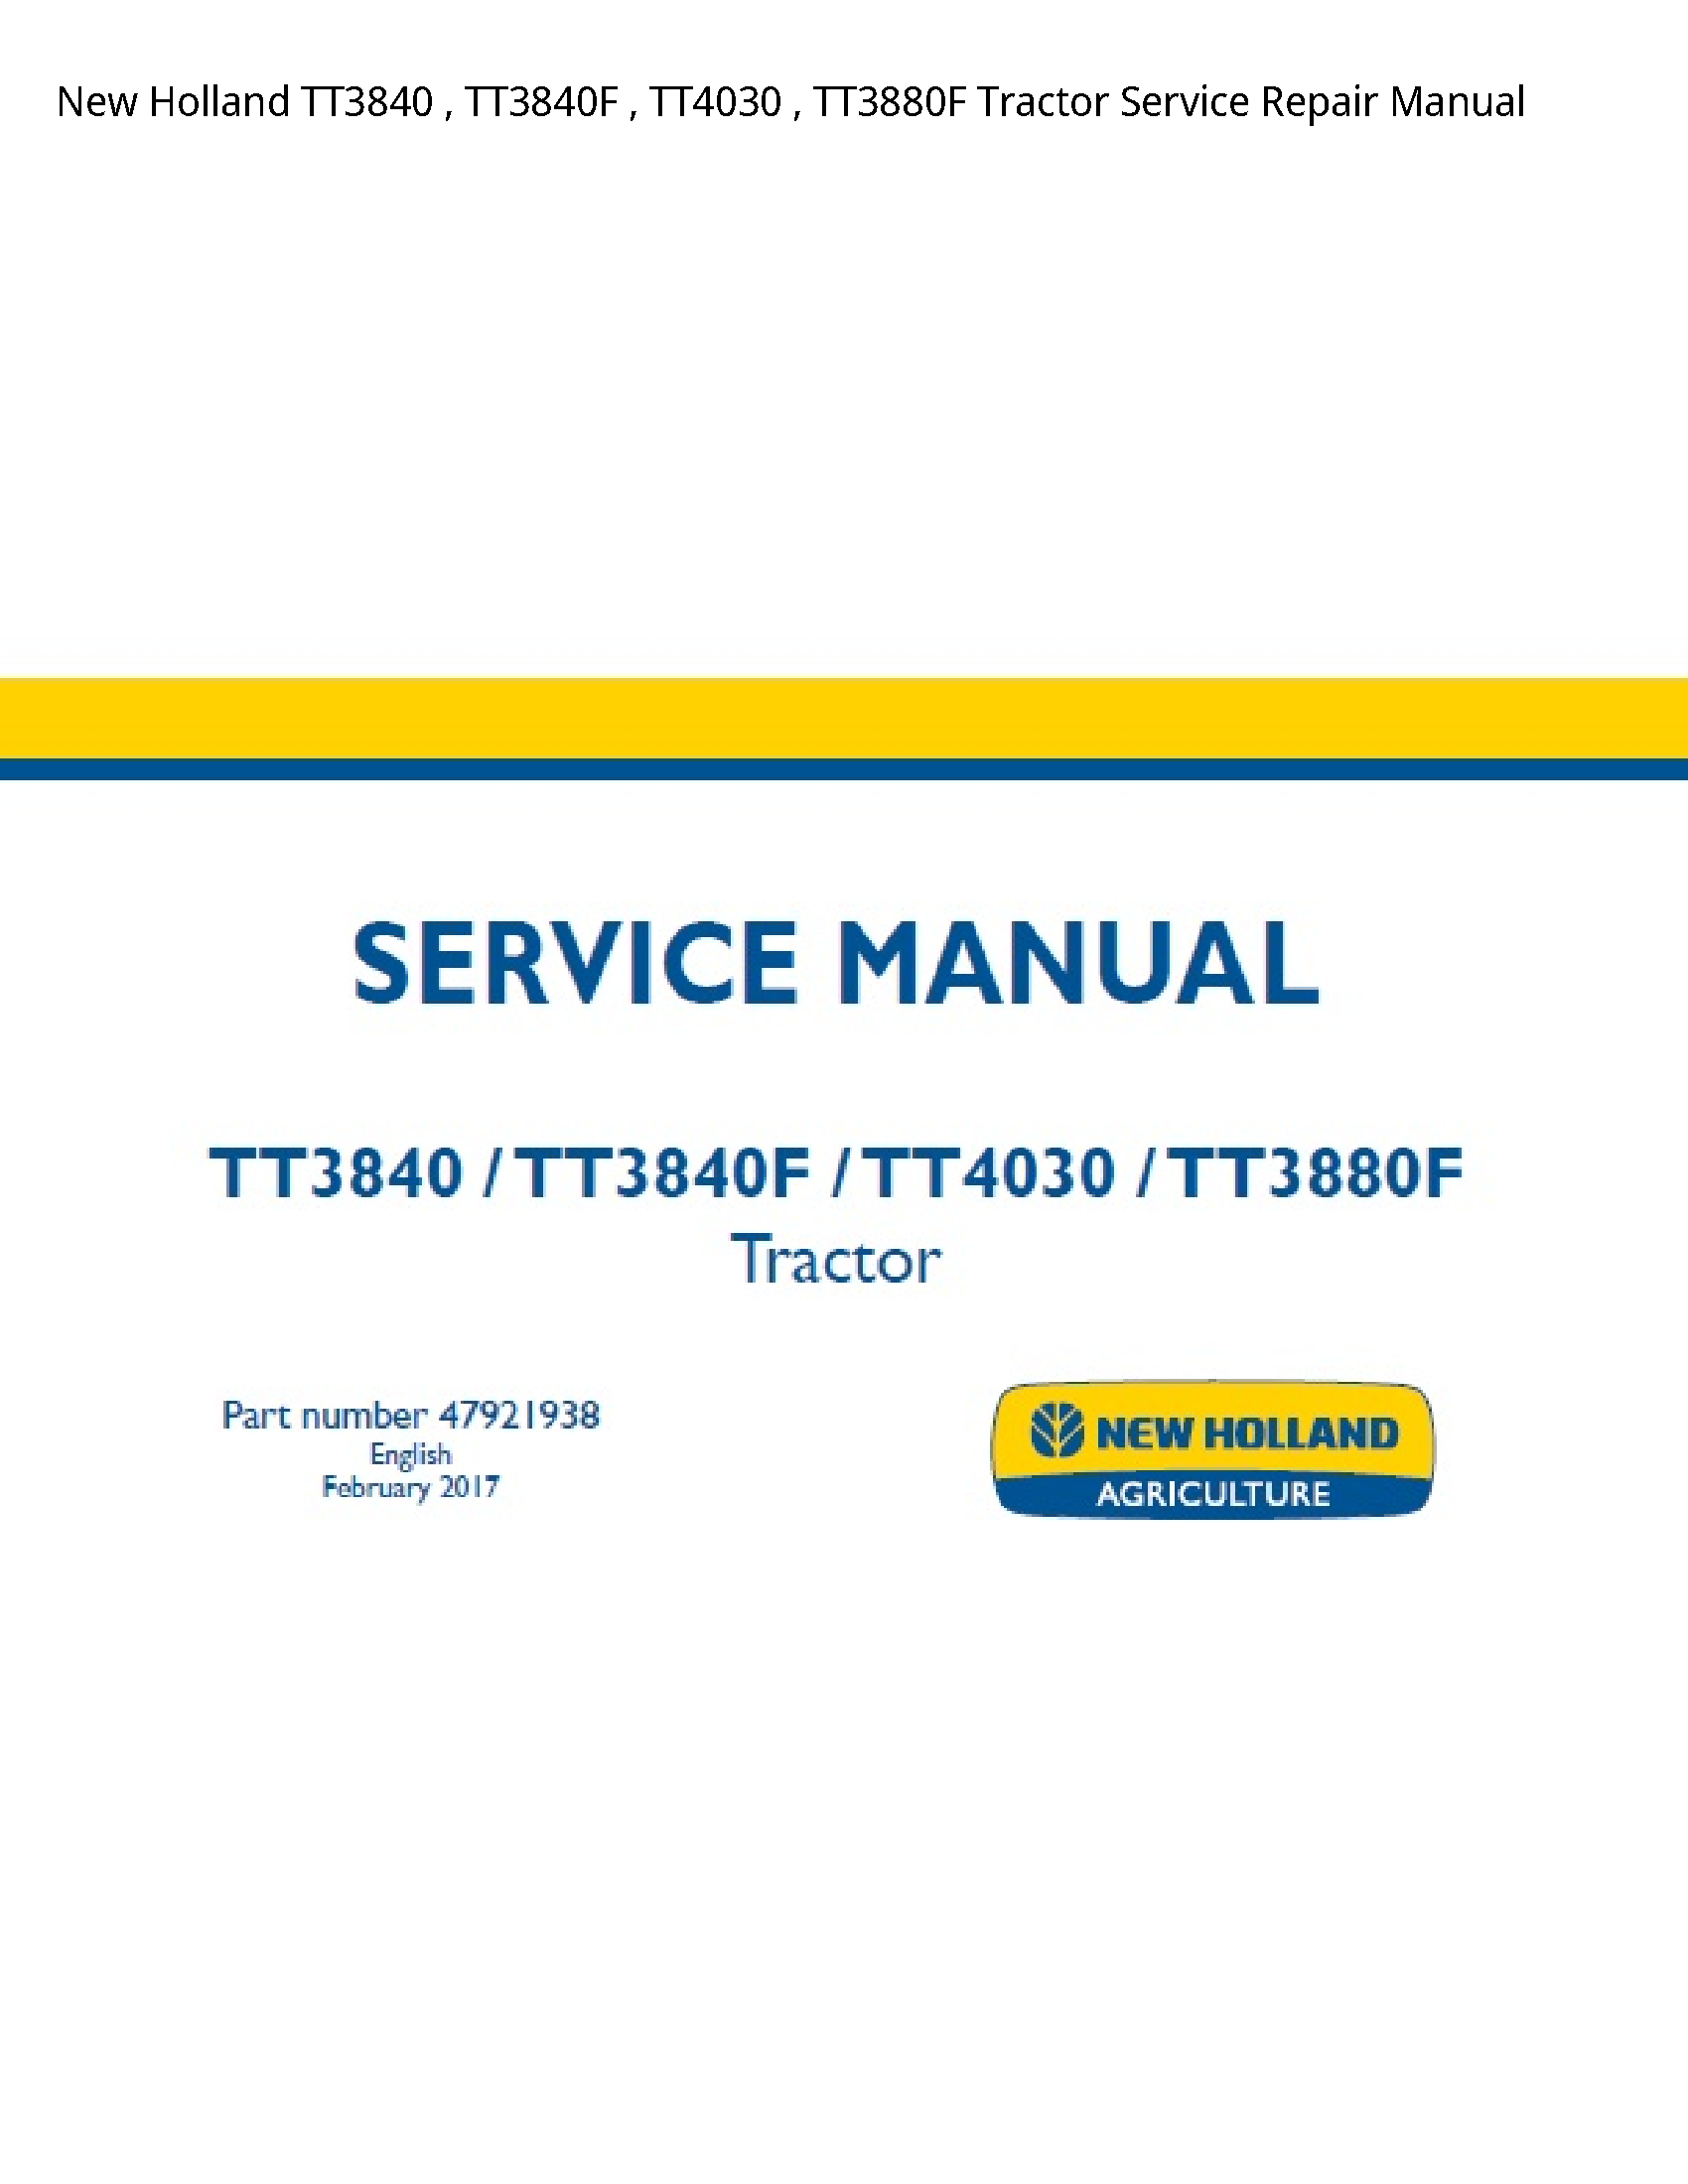 New Holland TT3840 Tractor manual